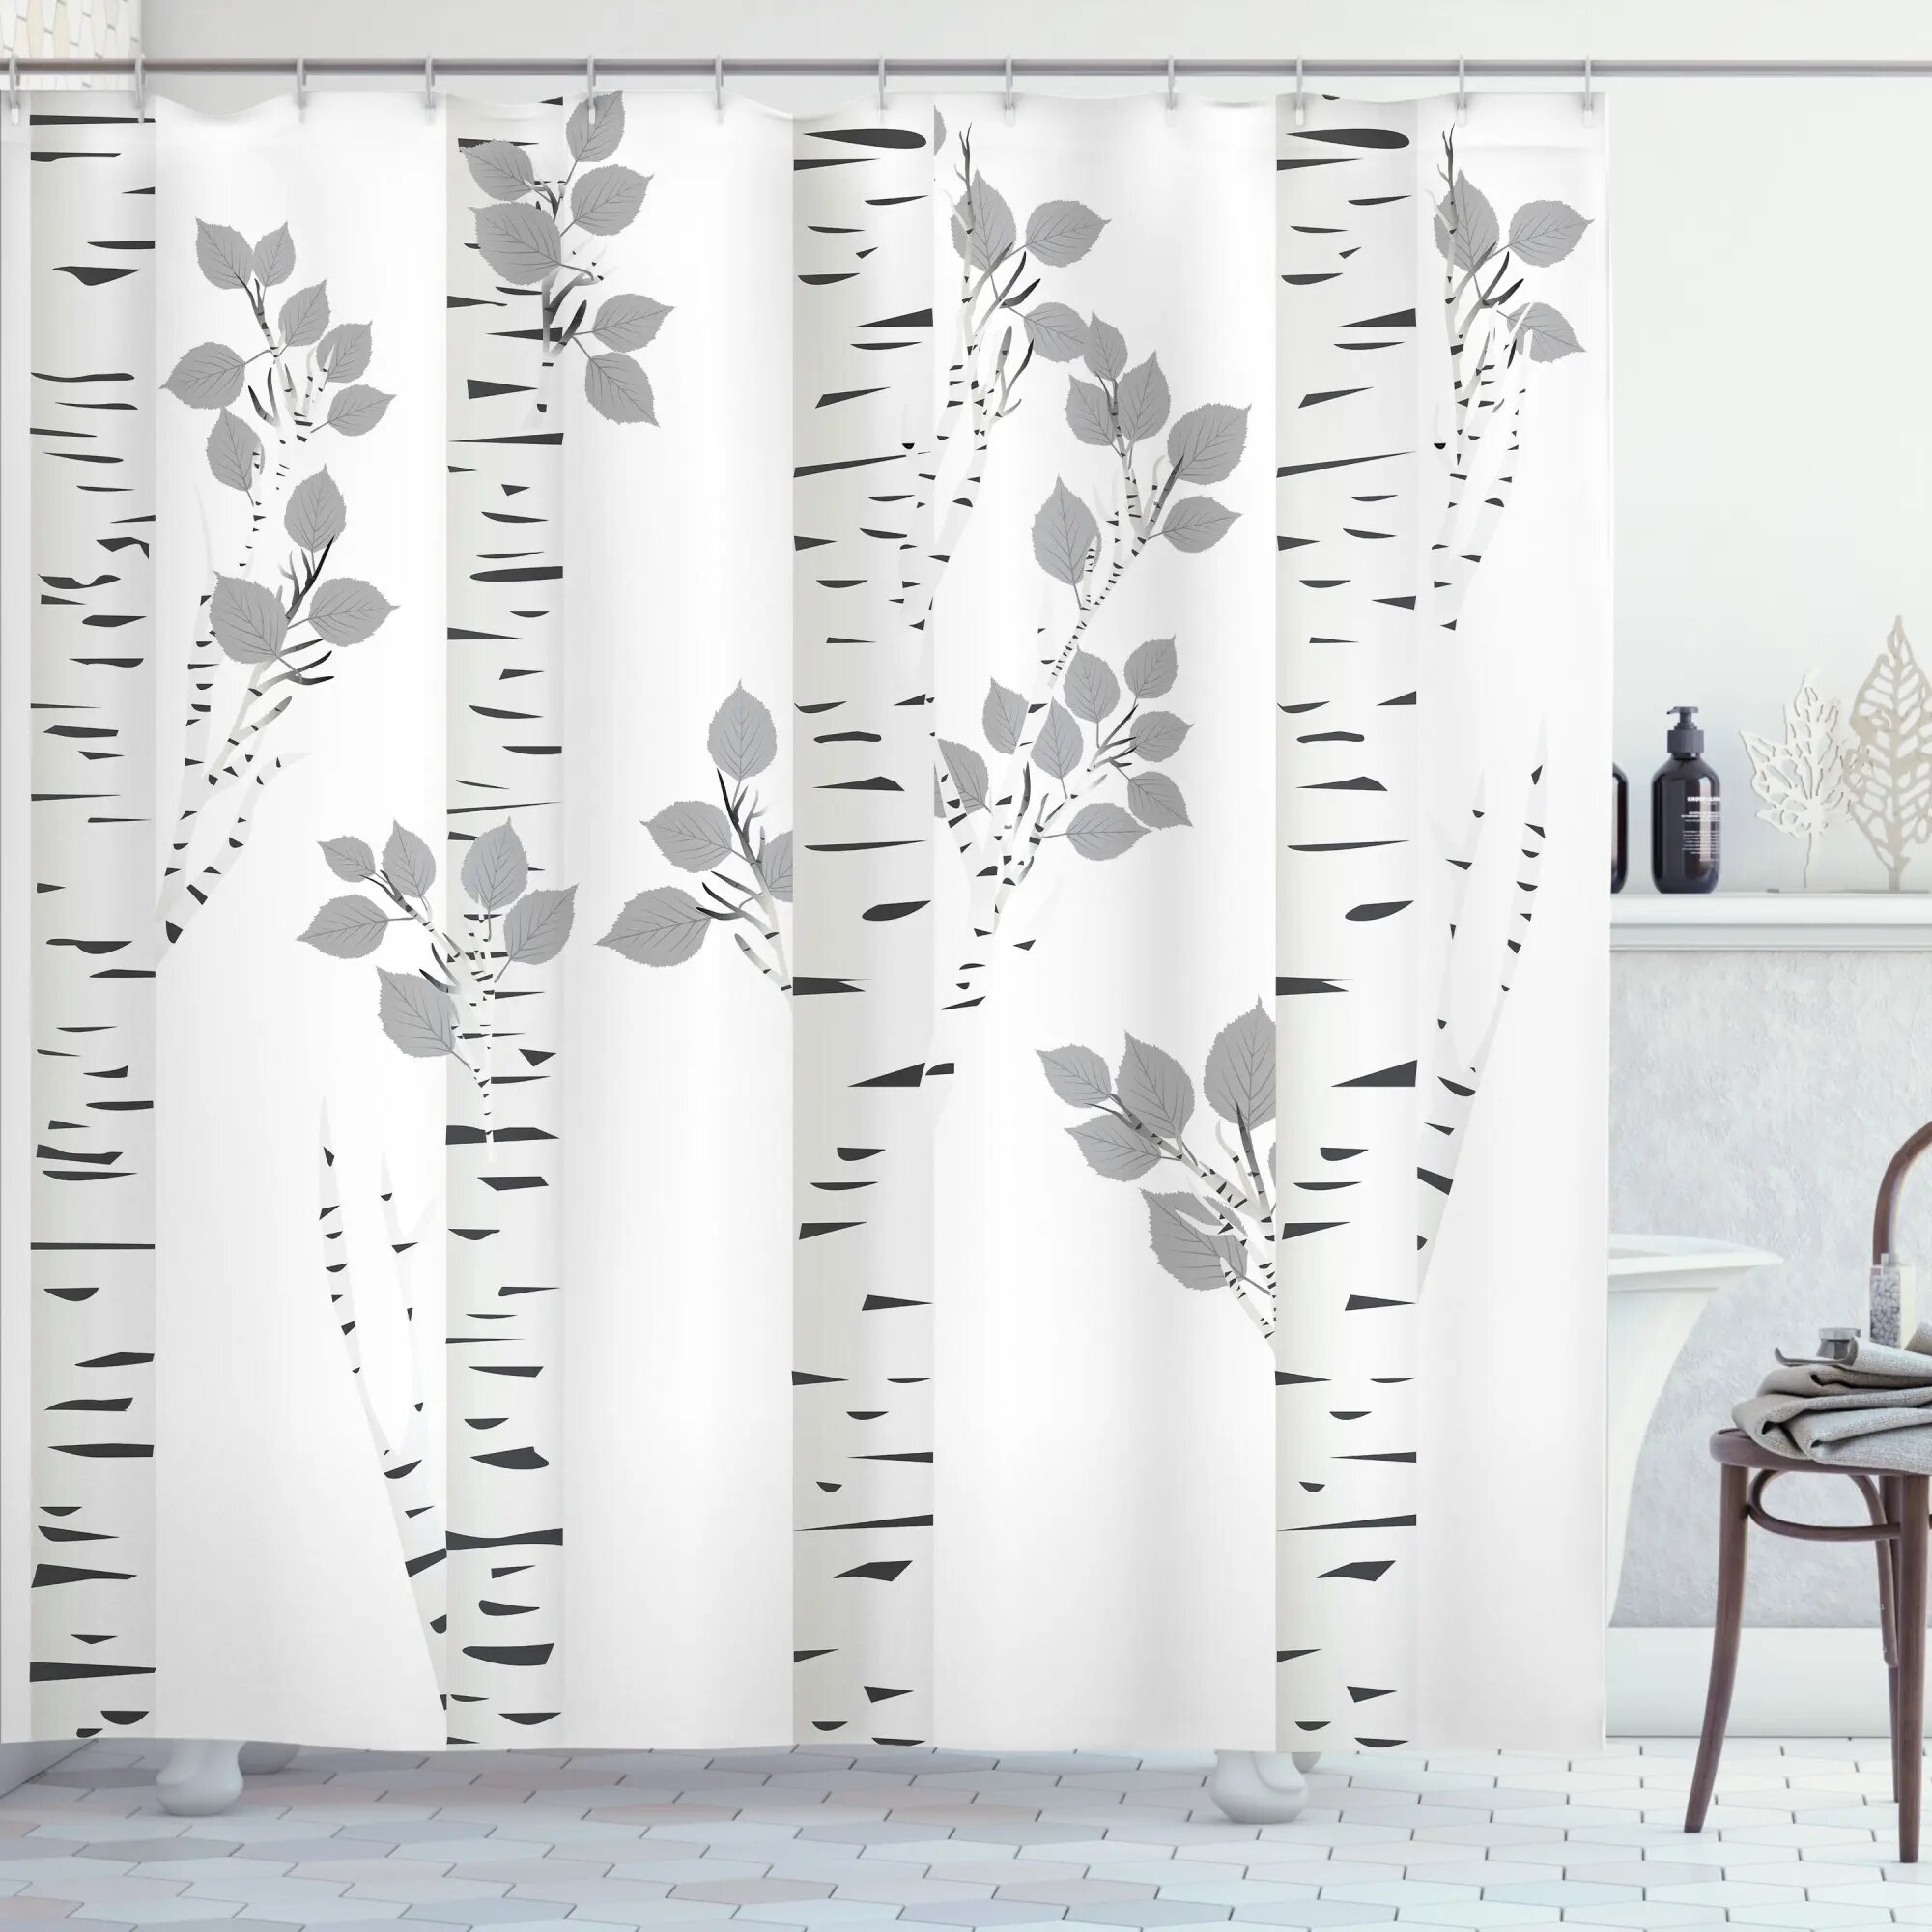 Birch Tree Shower Curtain Set + Hooks East Urban Home Size: 70 H x 69 W